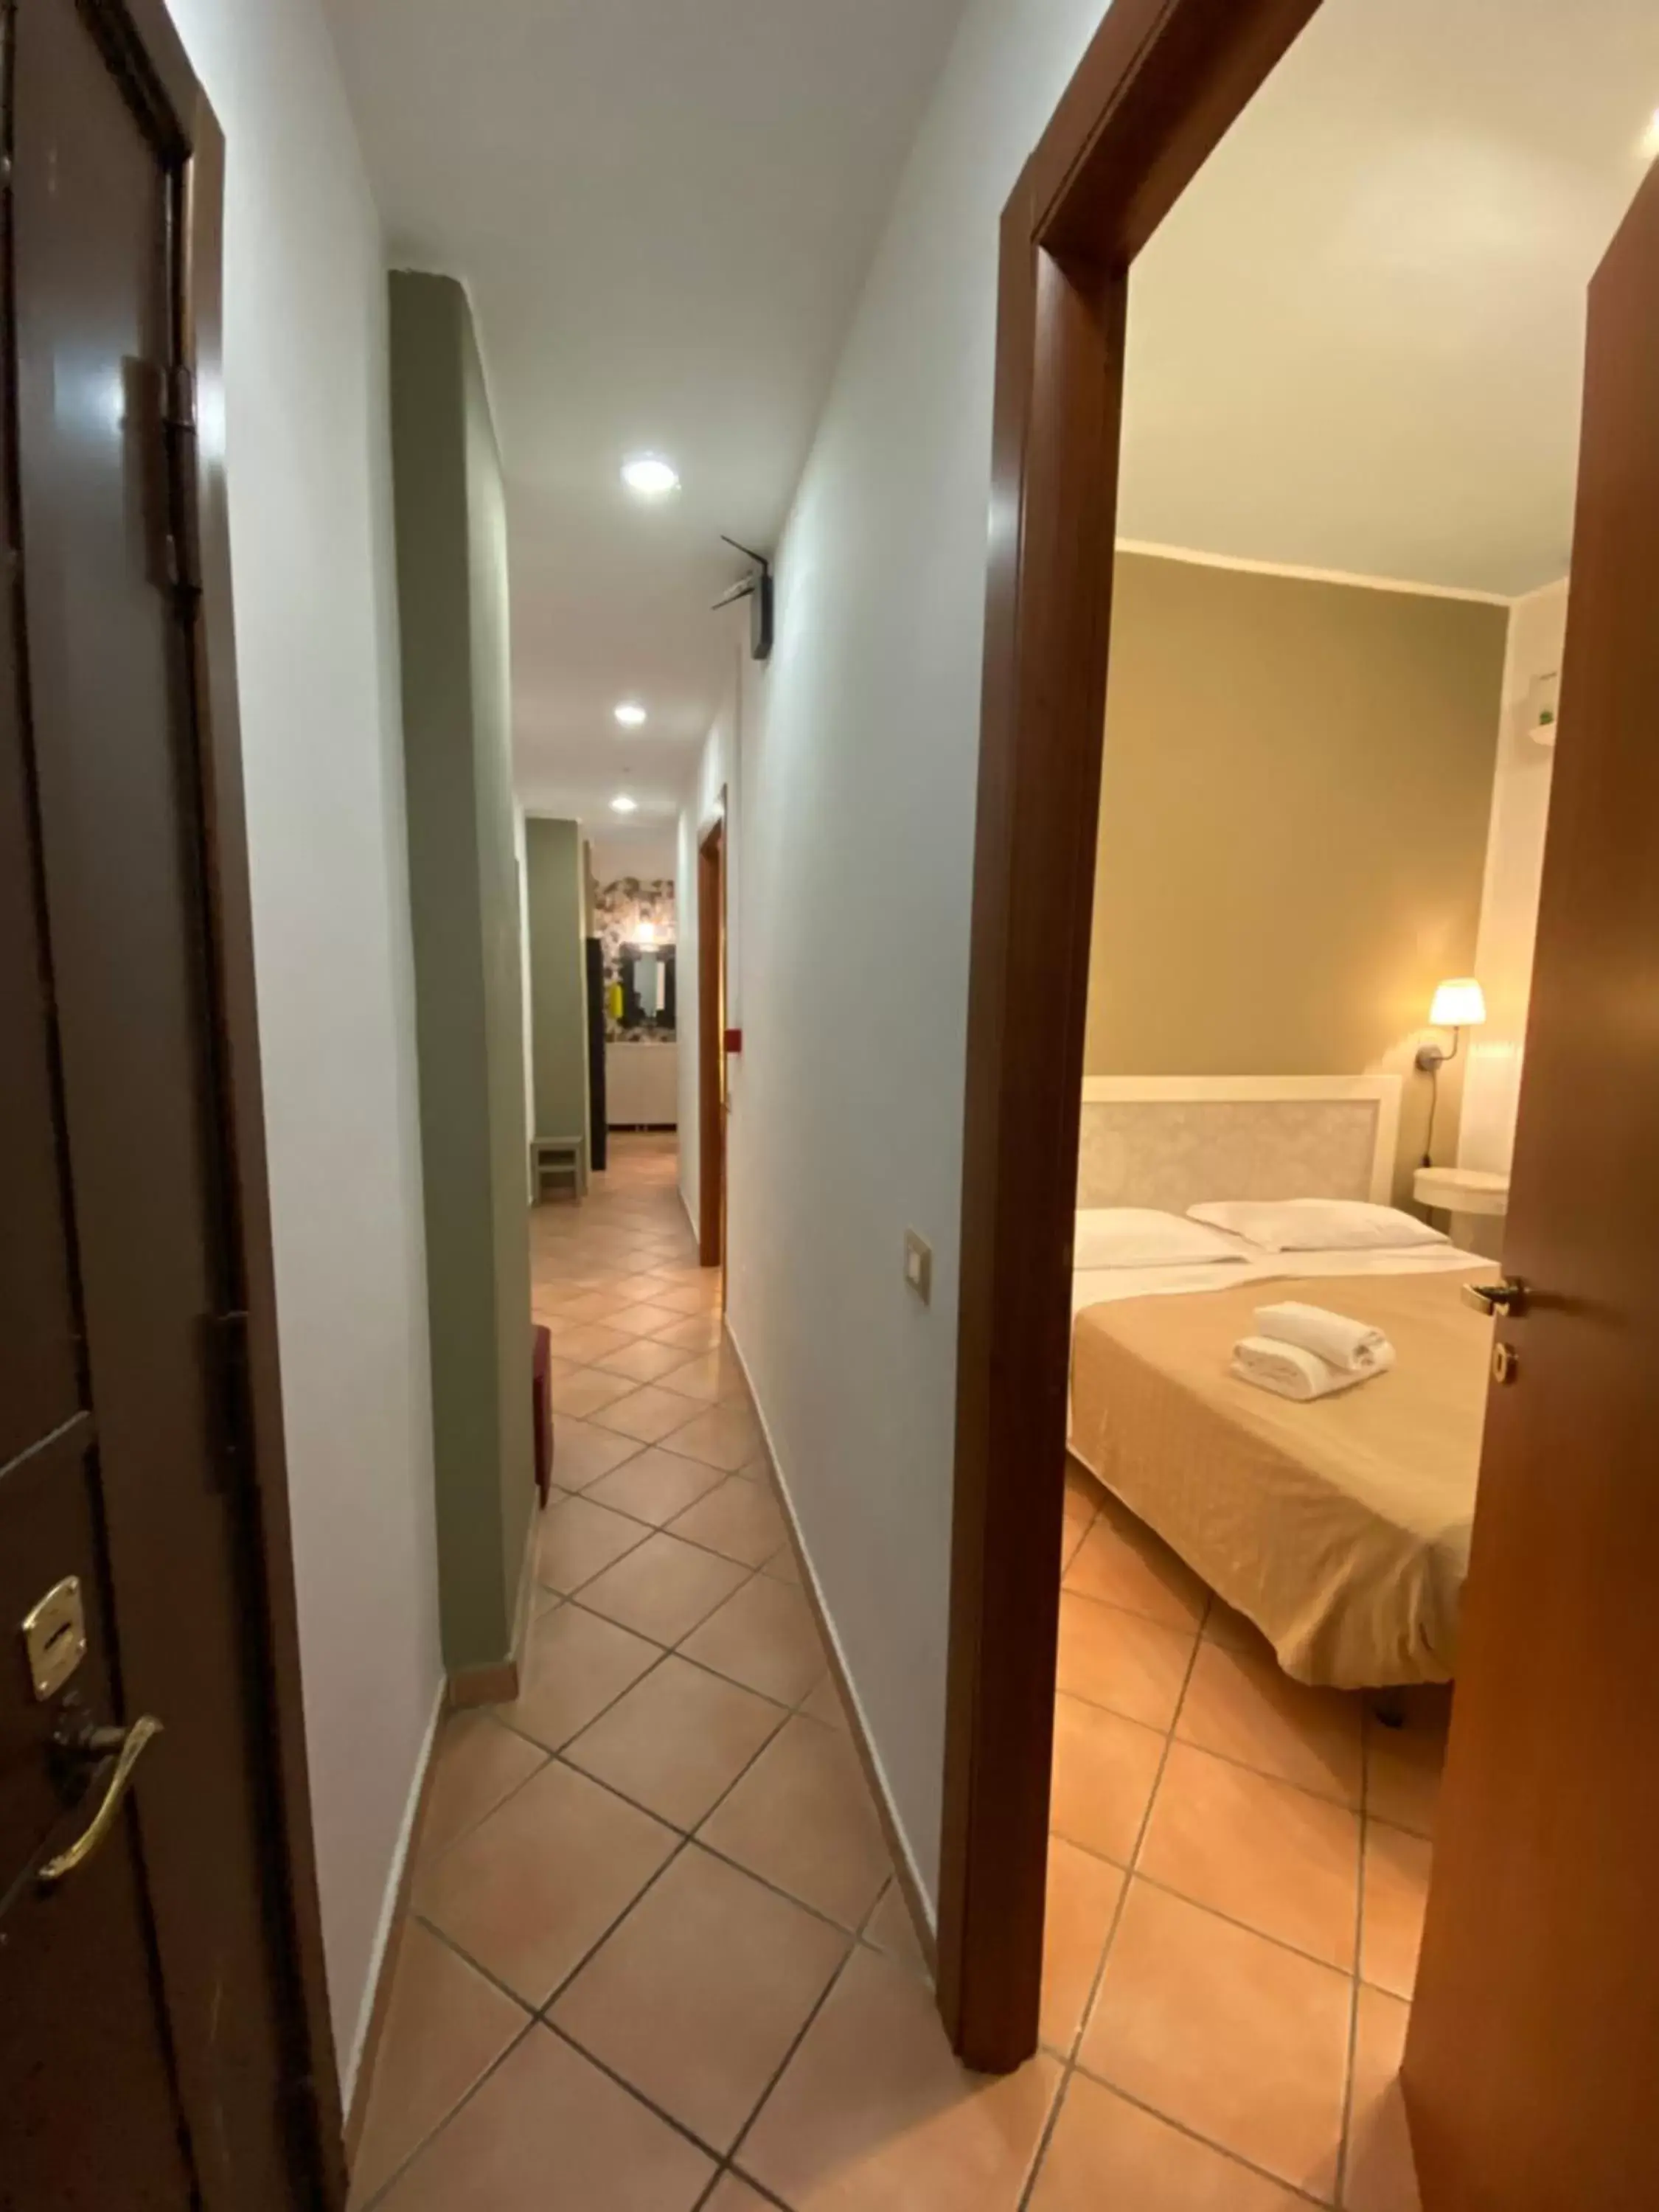 Photo of the whole room, Bathroom in Hotel Europeo Napoli